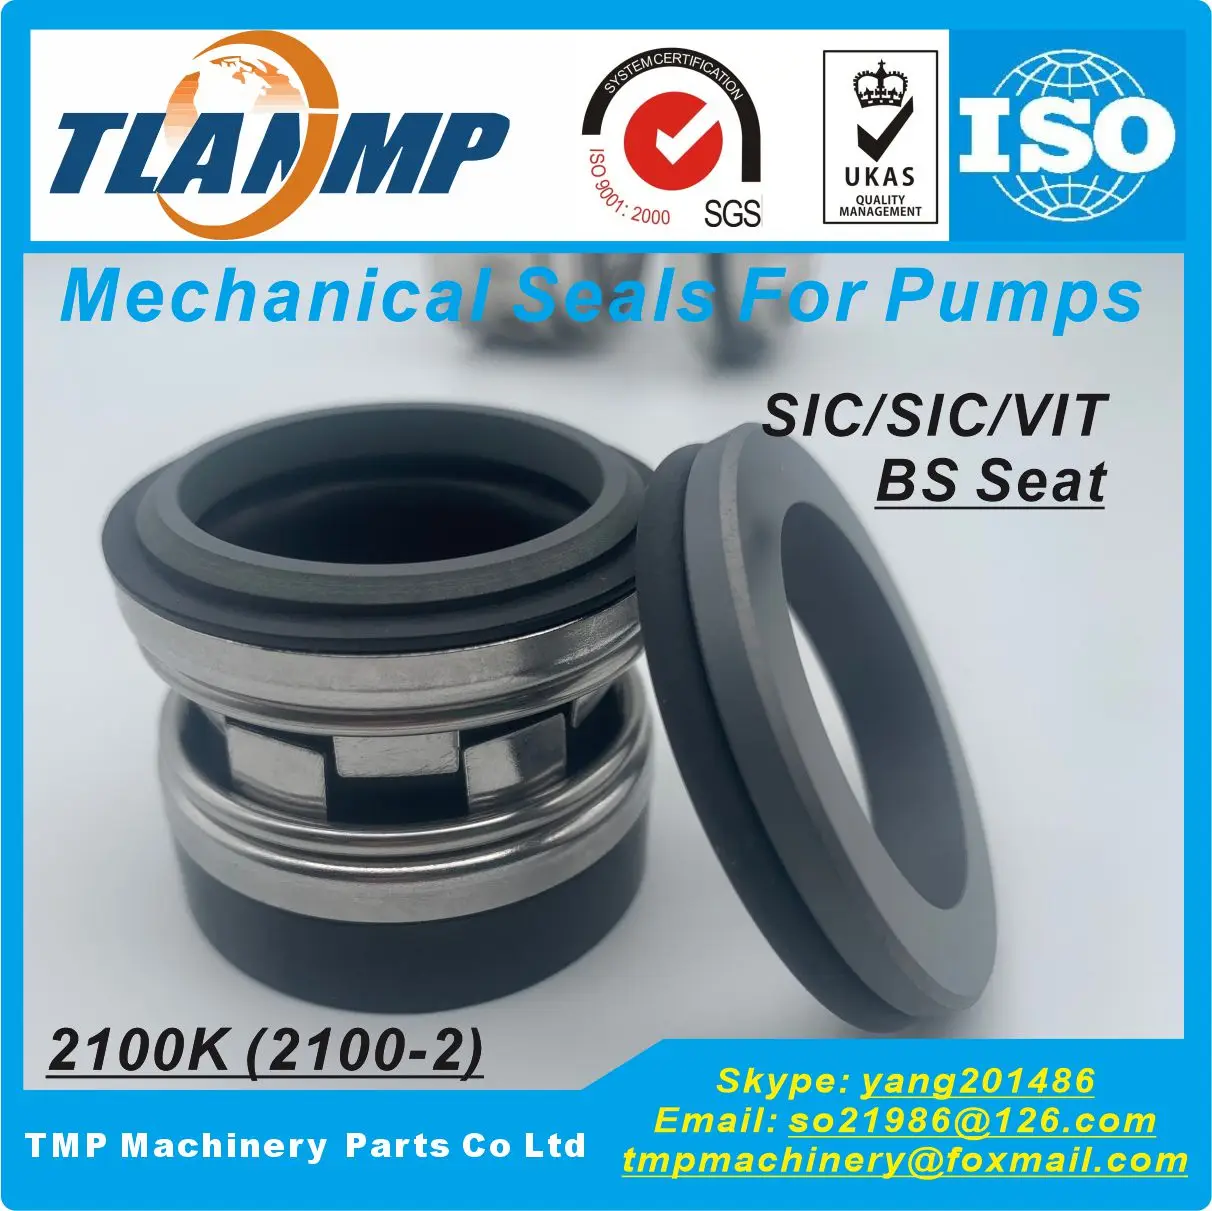 TJ-0580-K-2 , 2100-2-58 , 2100K-58 , 2100-58 , INT-0580-K (Rotary Pressed Length L3*=42.5mm) TLANMP Mechanical Seals